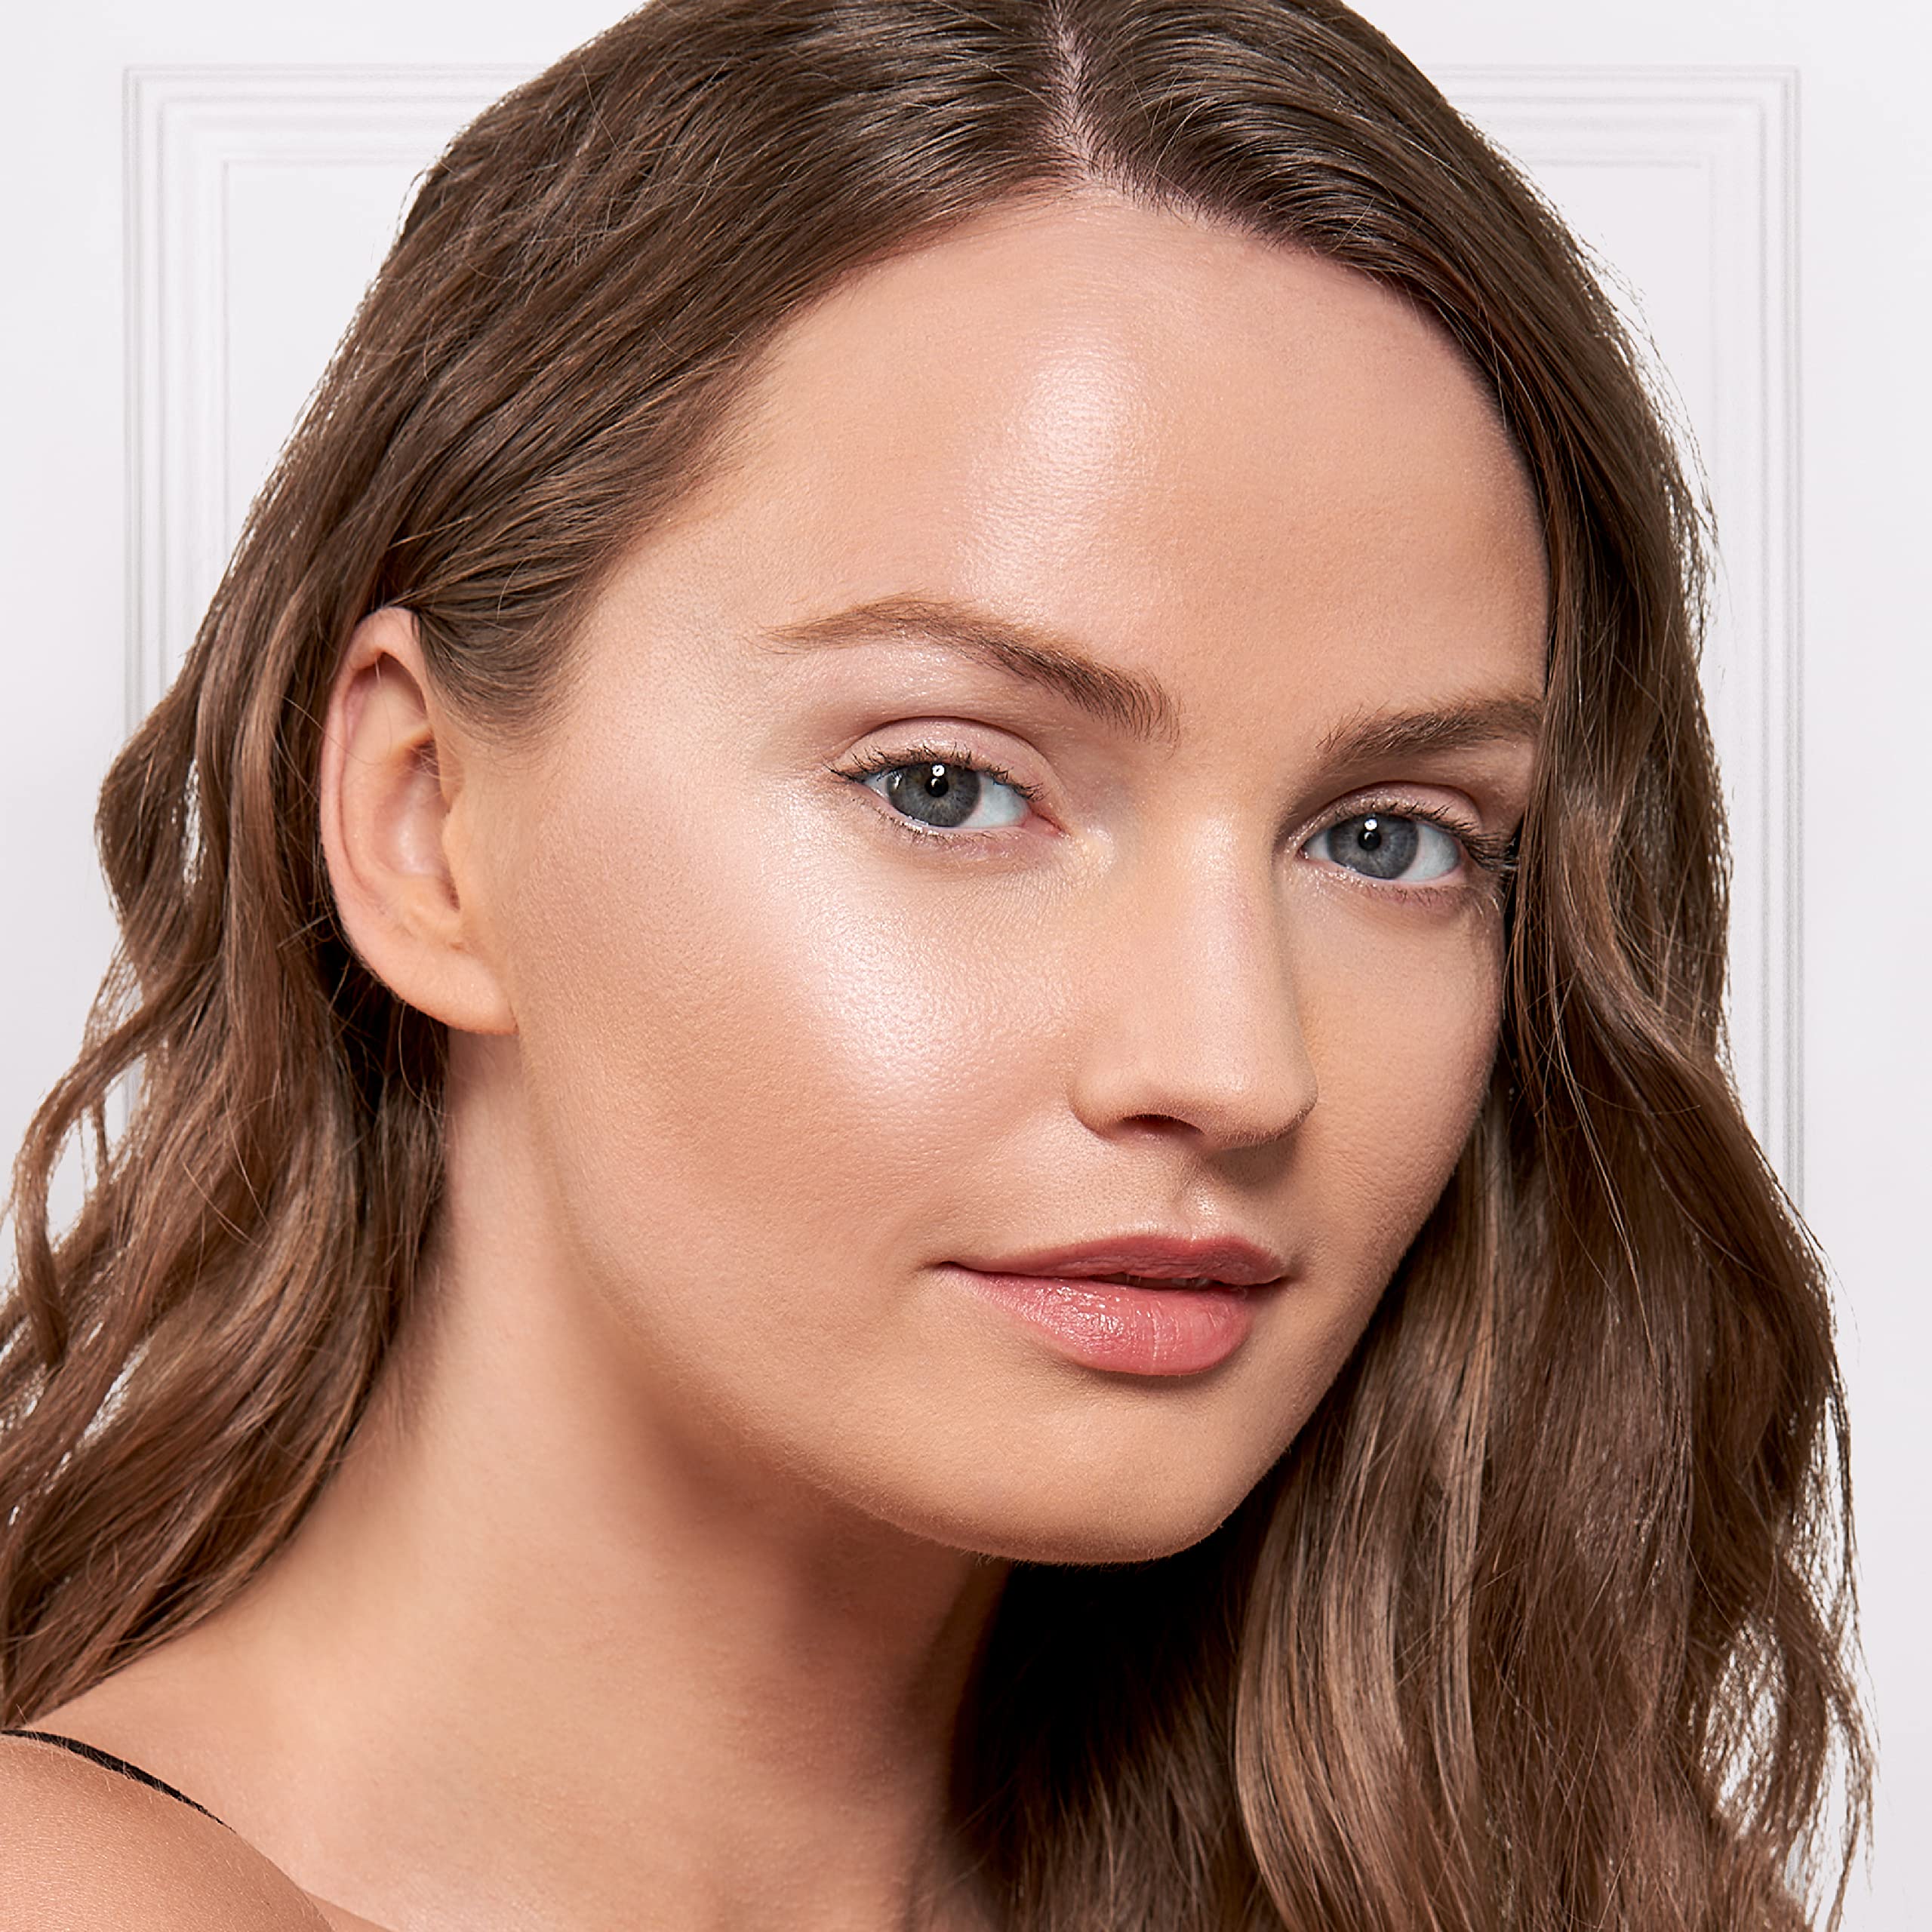 L’Oréal Paris Makeup True Match Lumi Glotion, Natural Glow Enhancer, Illuminator Highlighter Skin Tint, for an All Day Radiant Glow, Fair, 1.35 Ounces